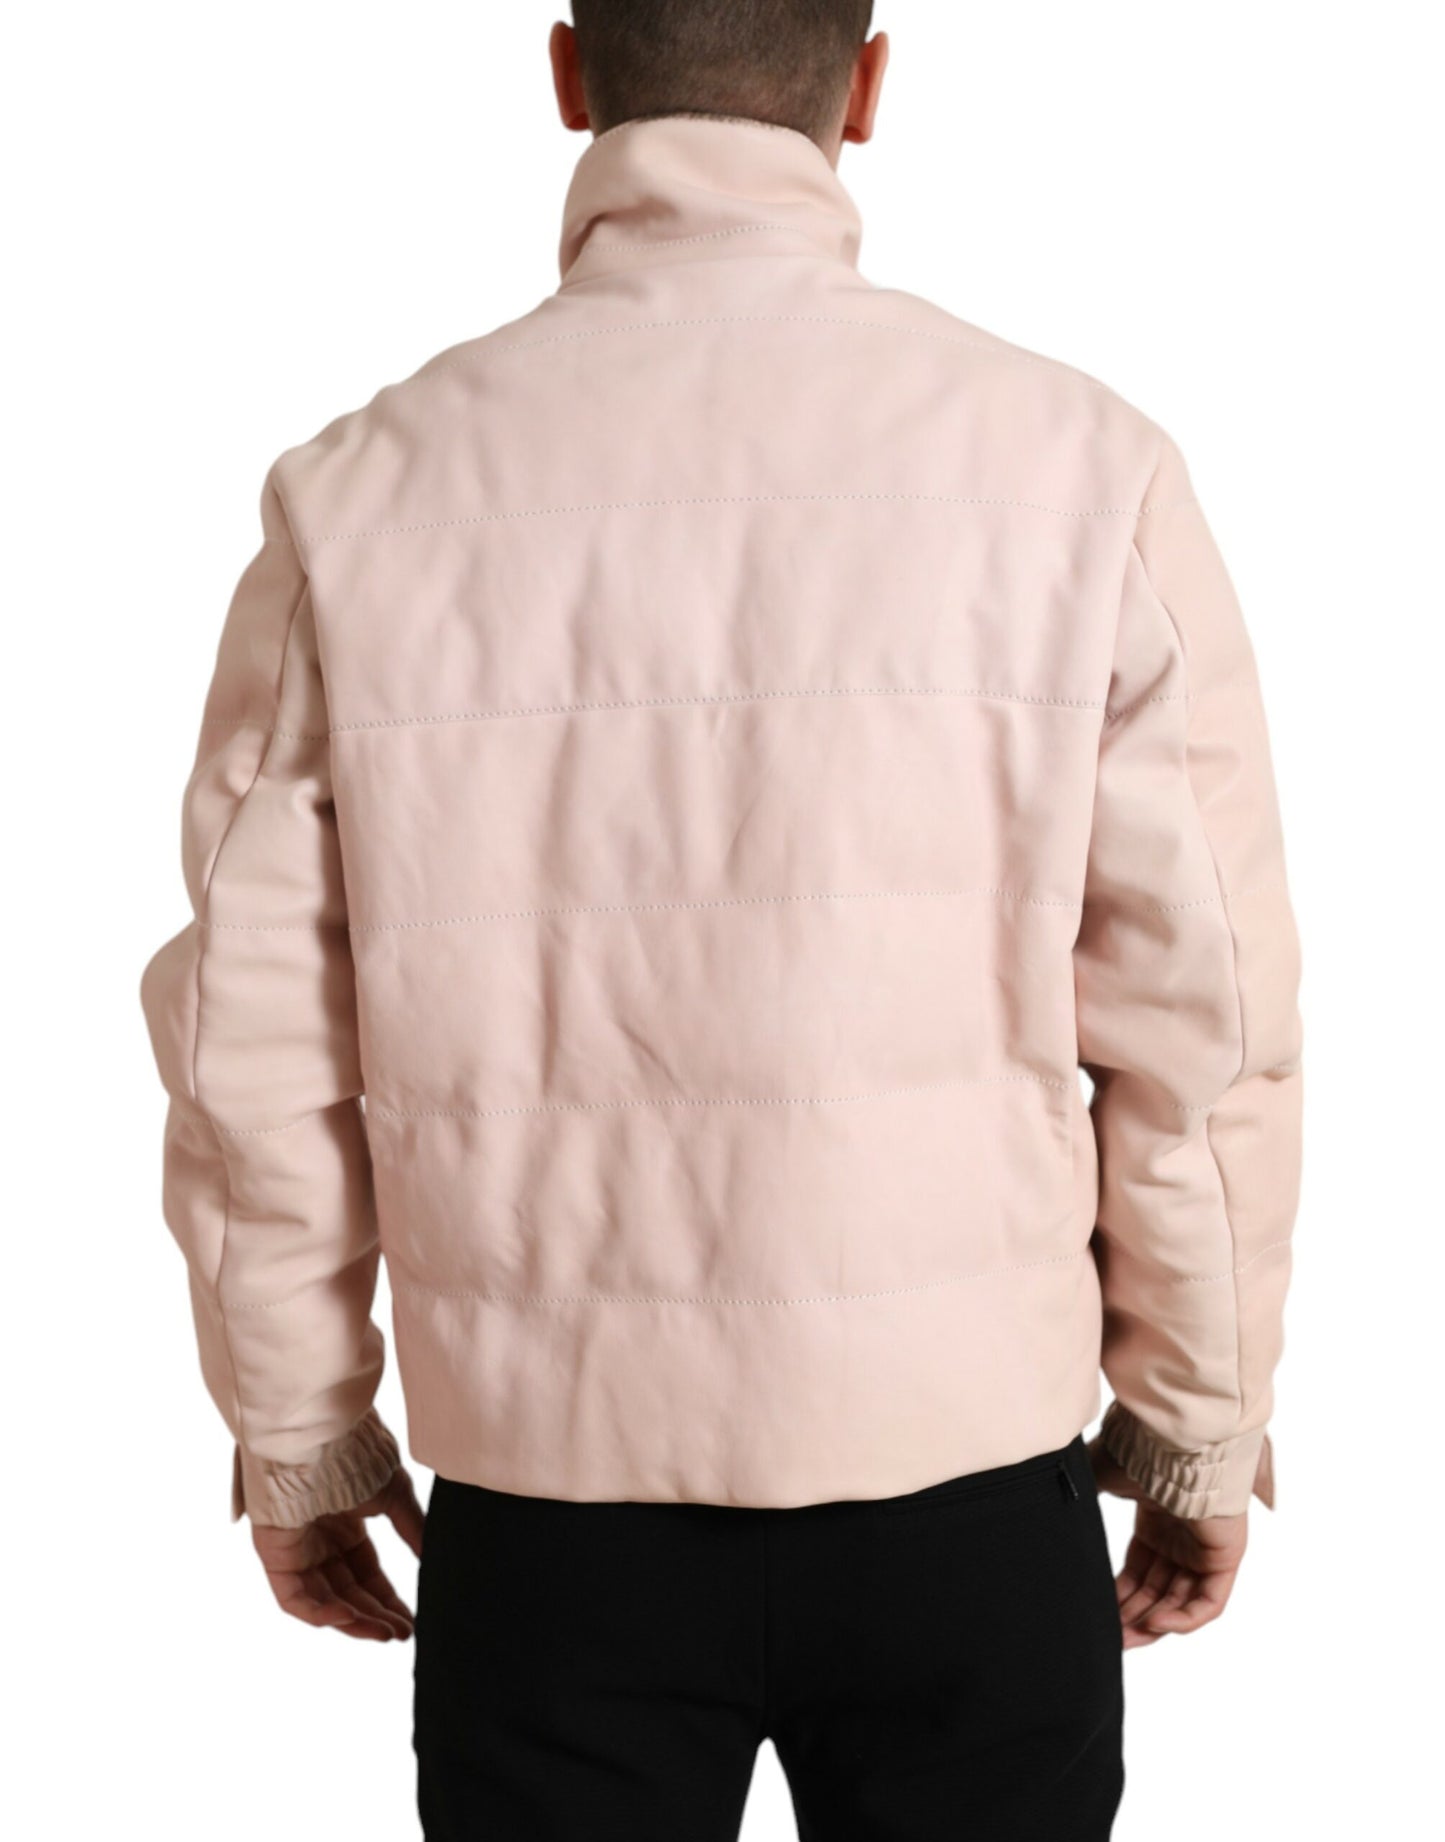 Chic Pink Puffer Jacket with Sleek Design